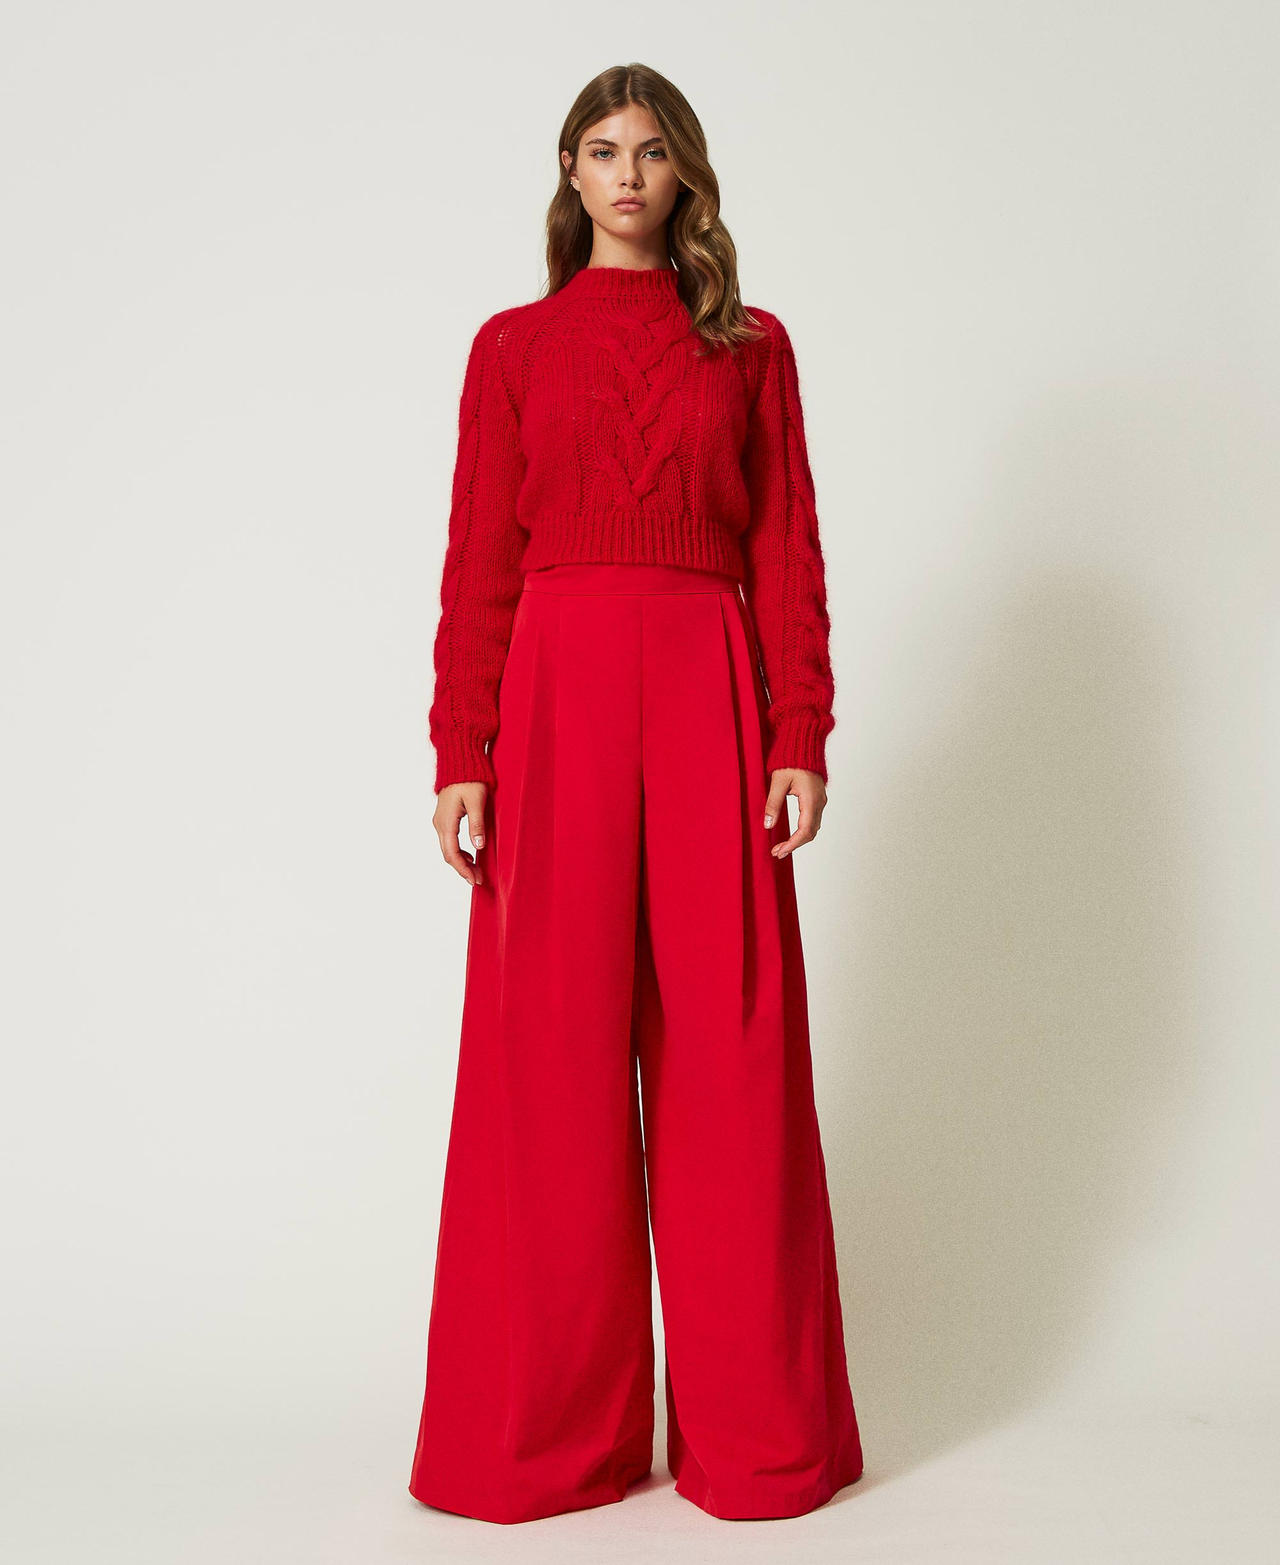 Taffeta palazzo trousers Lacquer Red Woman 232TT2495-02